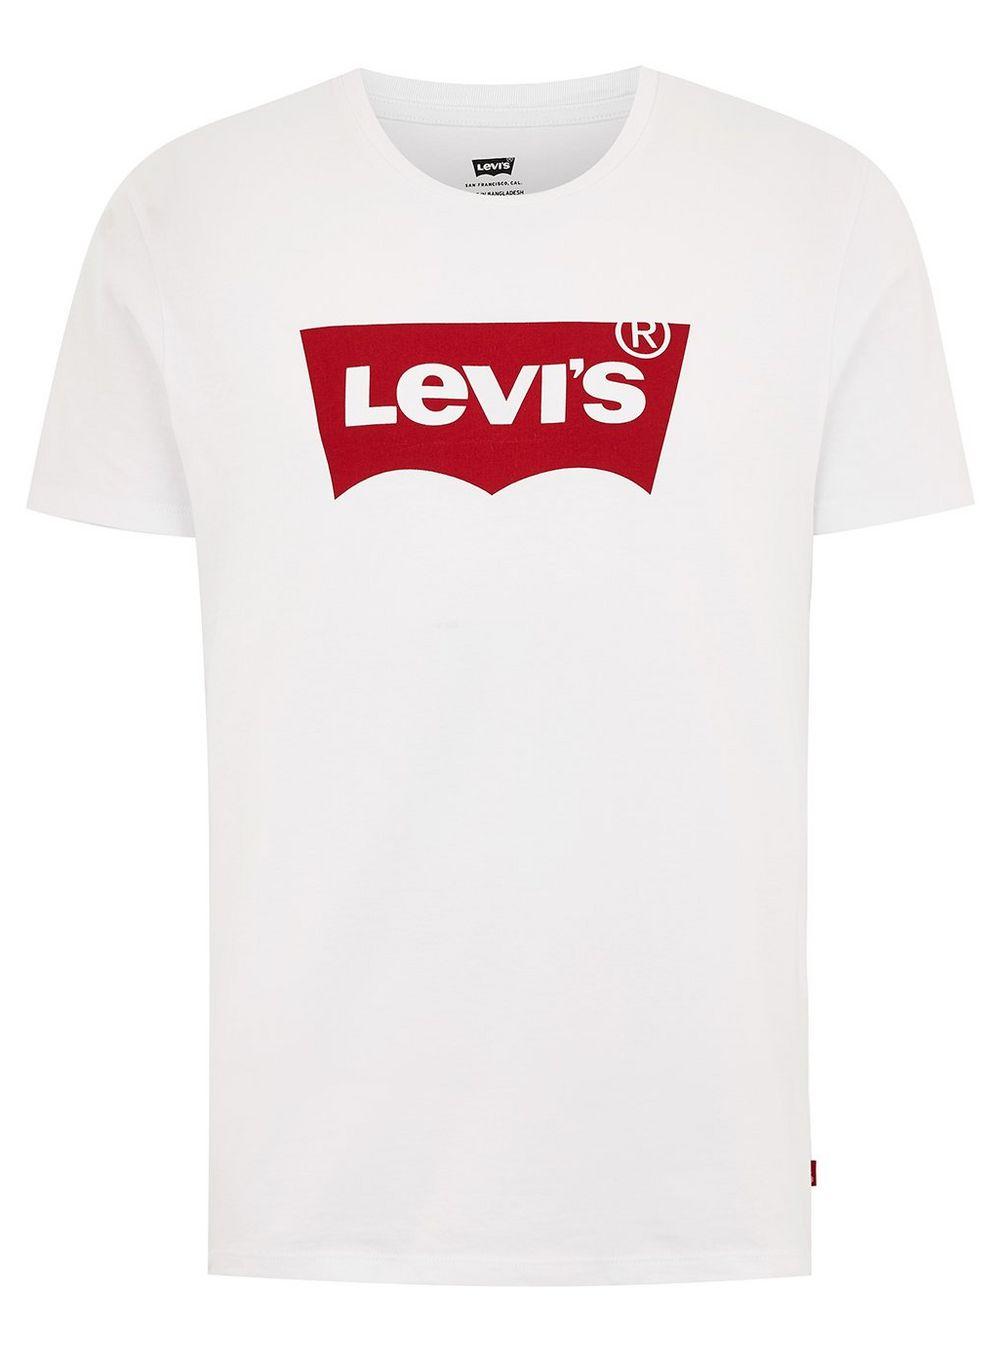 Shirt Logo - LEVI'S White Logo T-Shirt - TOPMAN